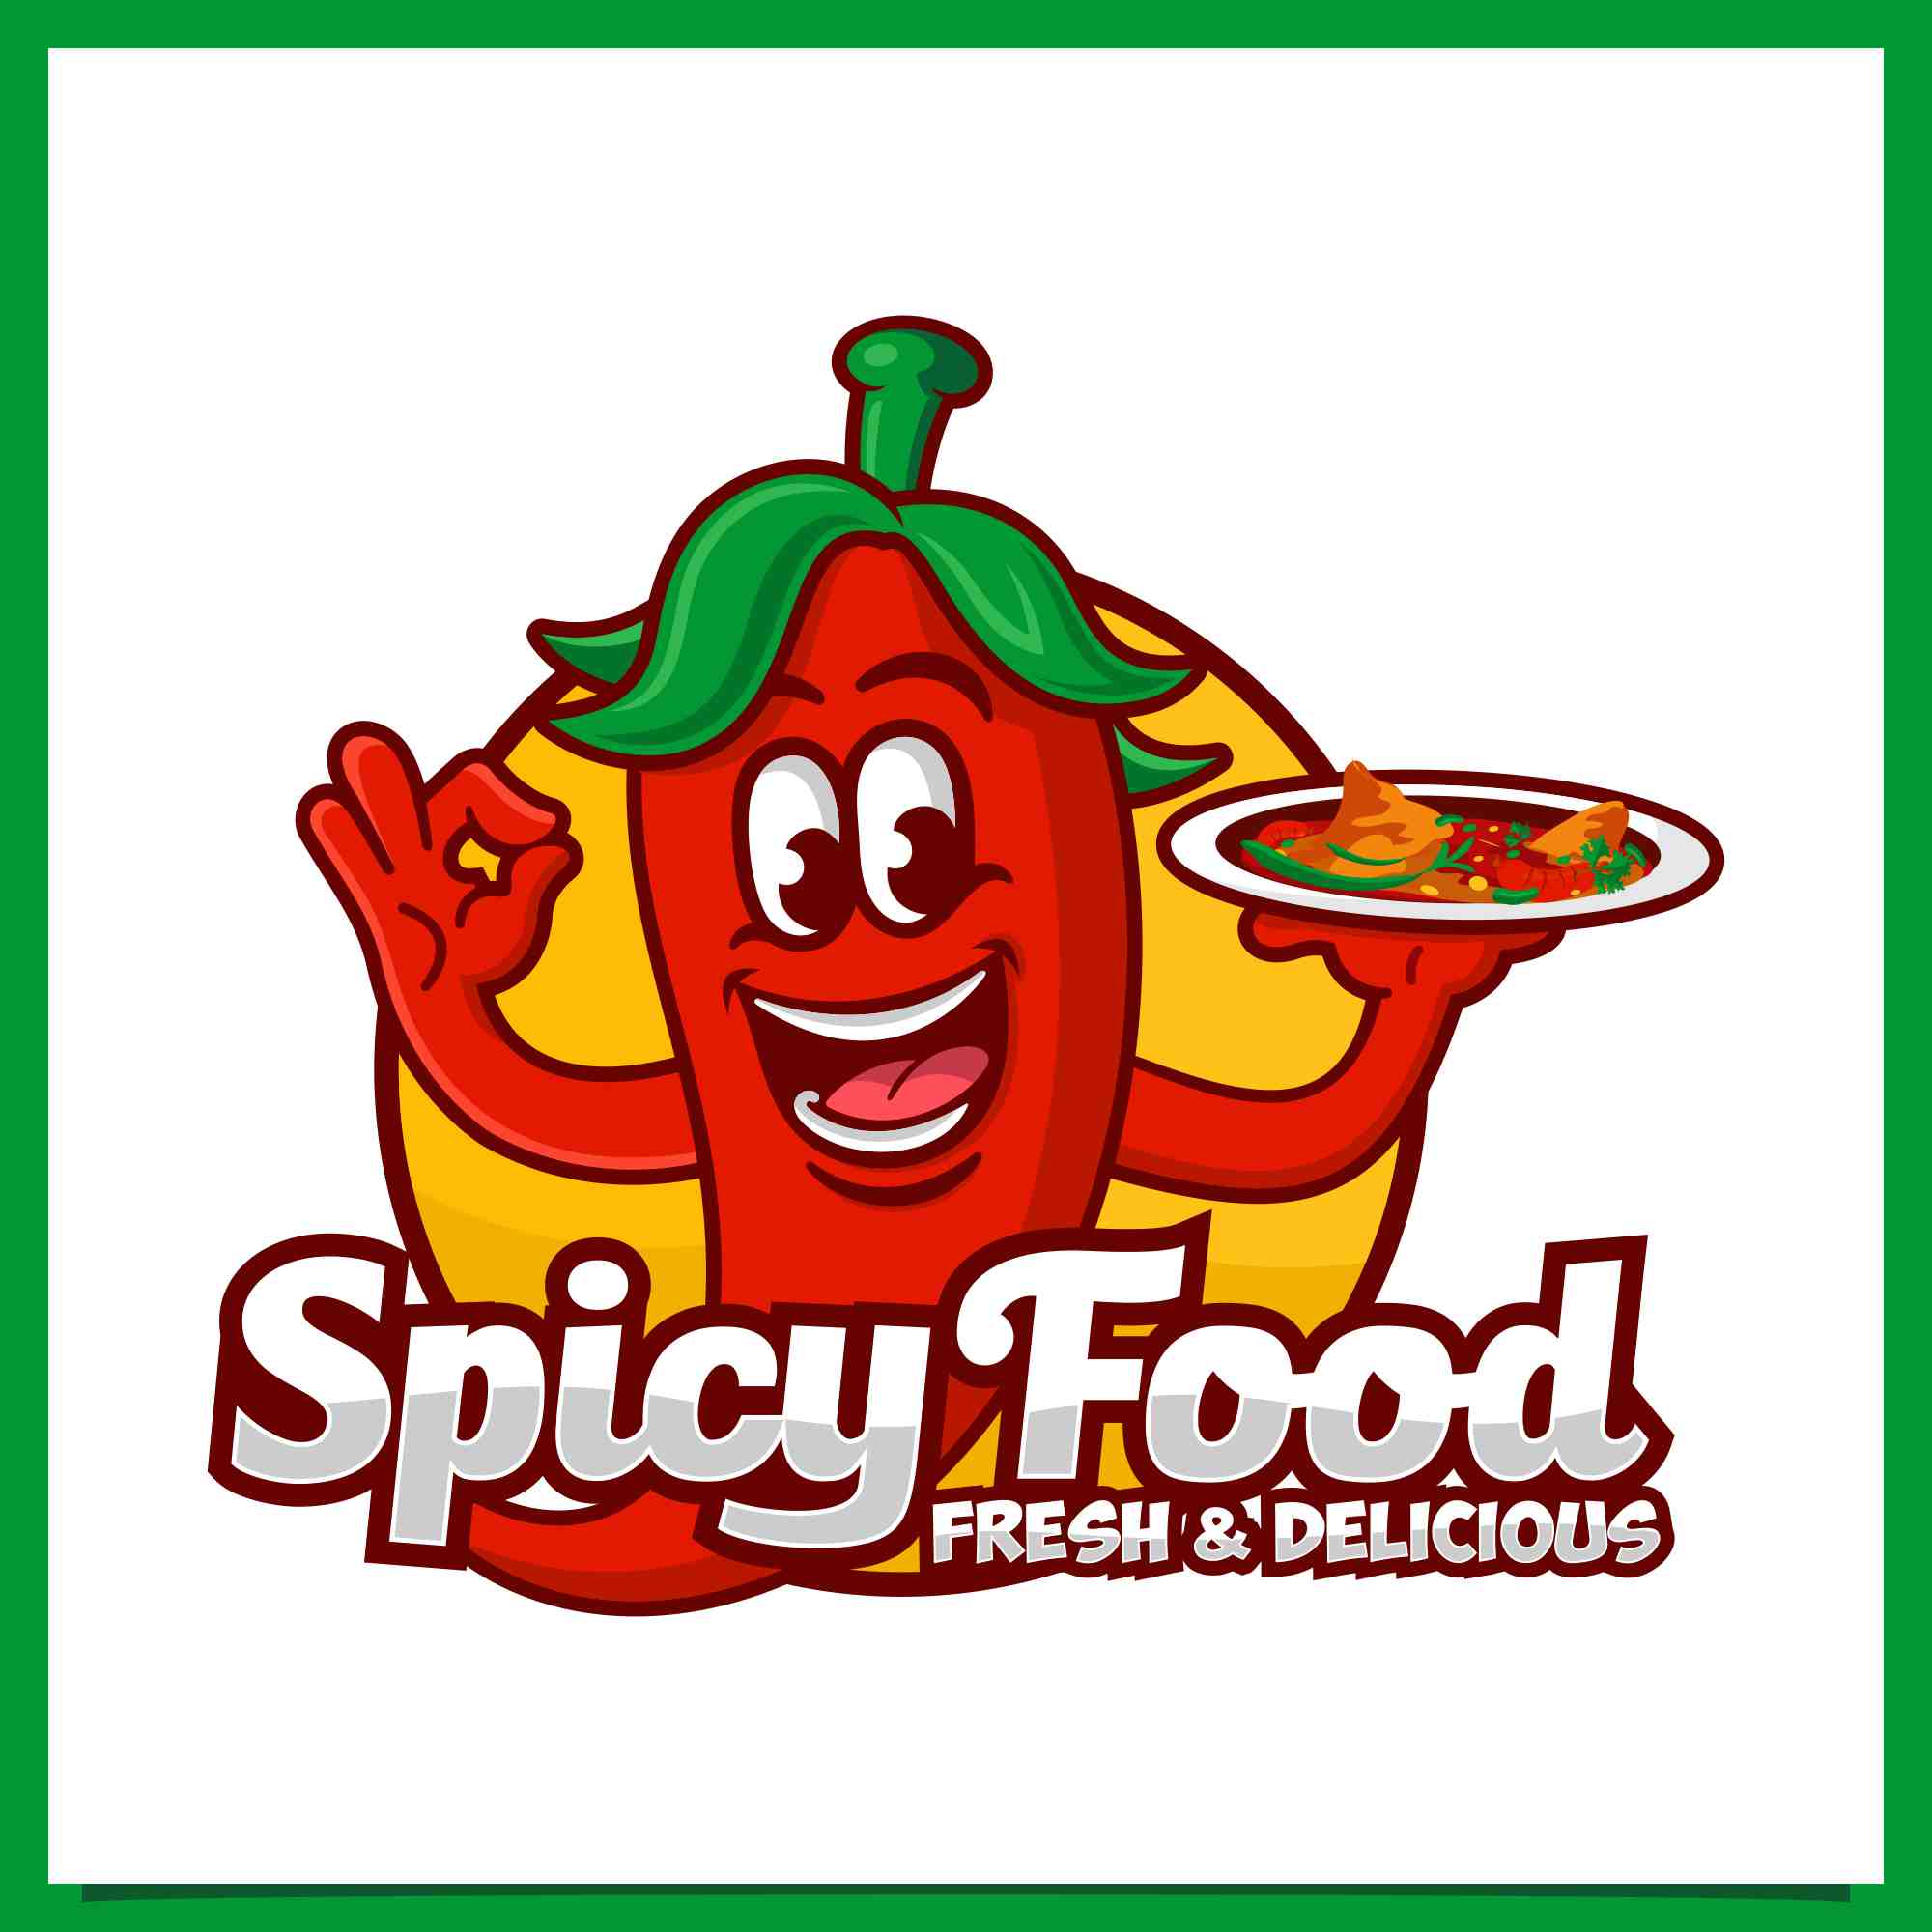 spicy food logo design illustration 1 732